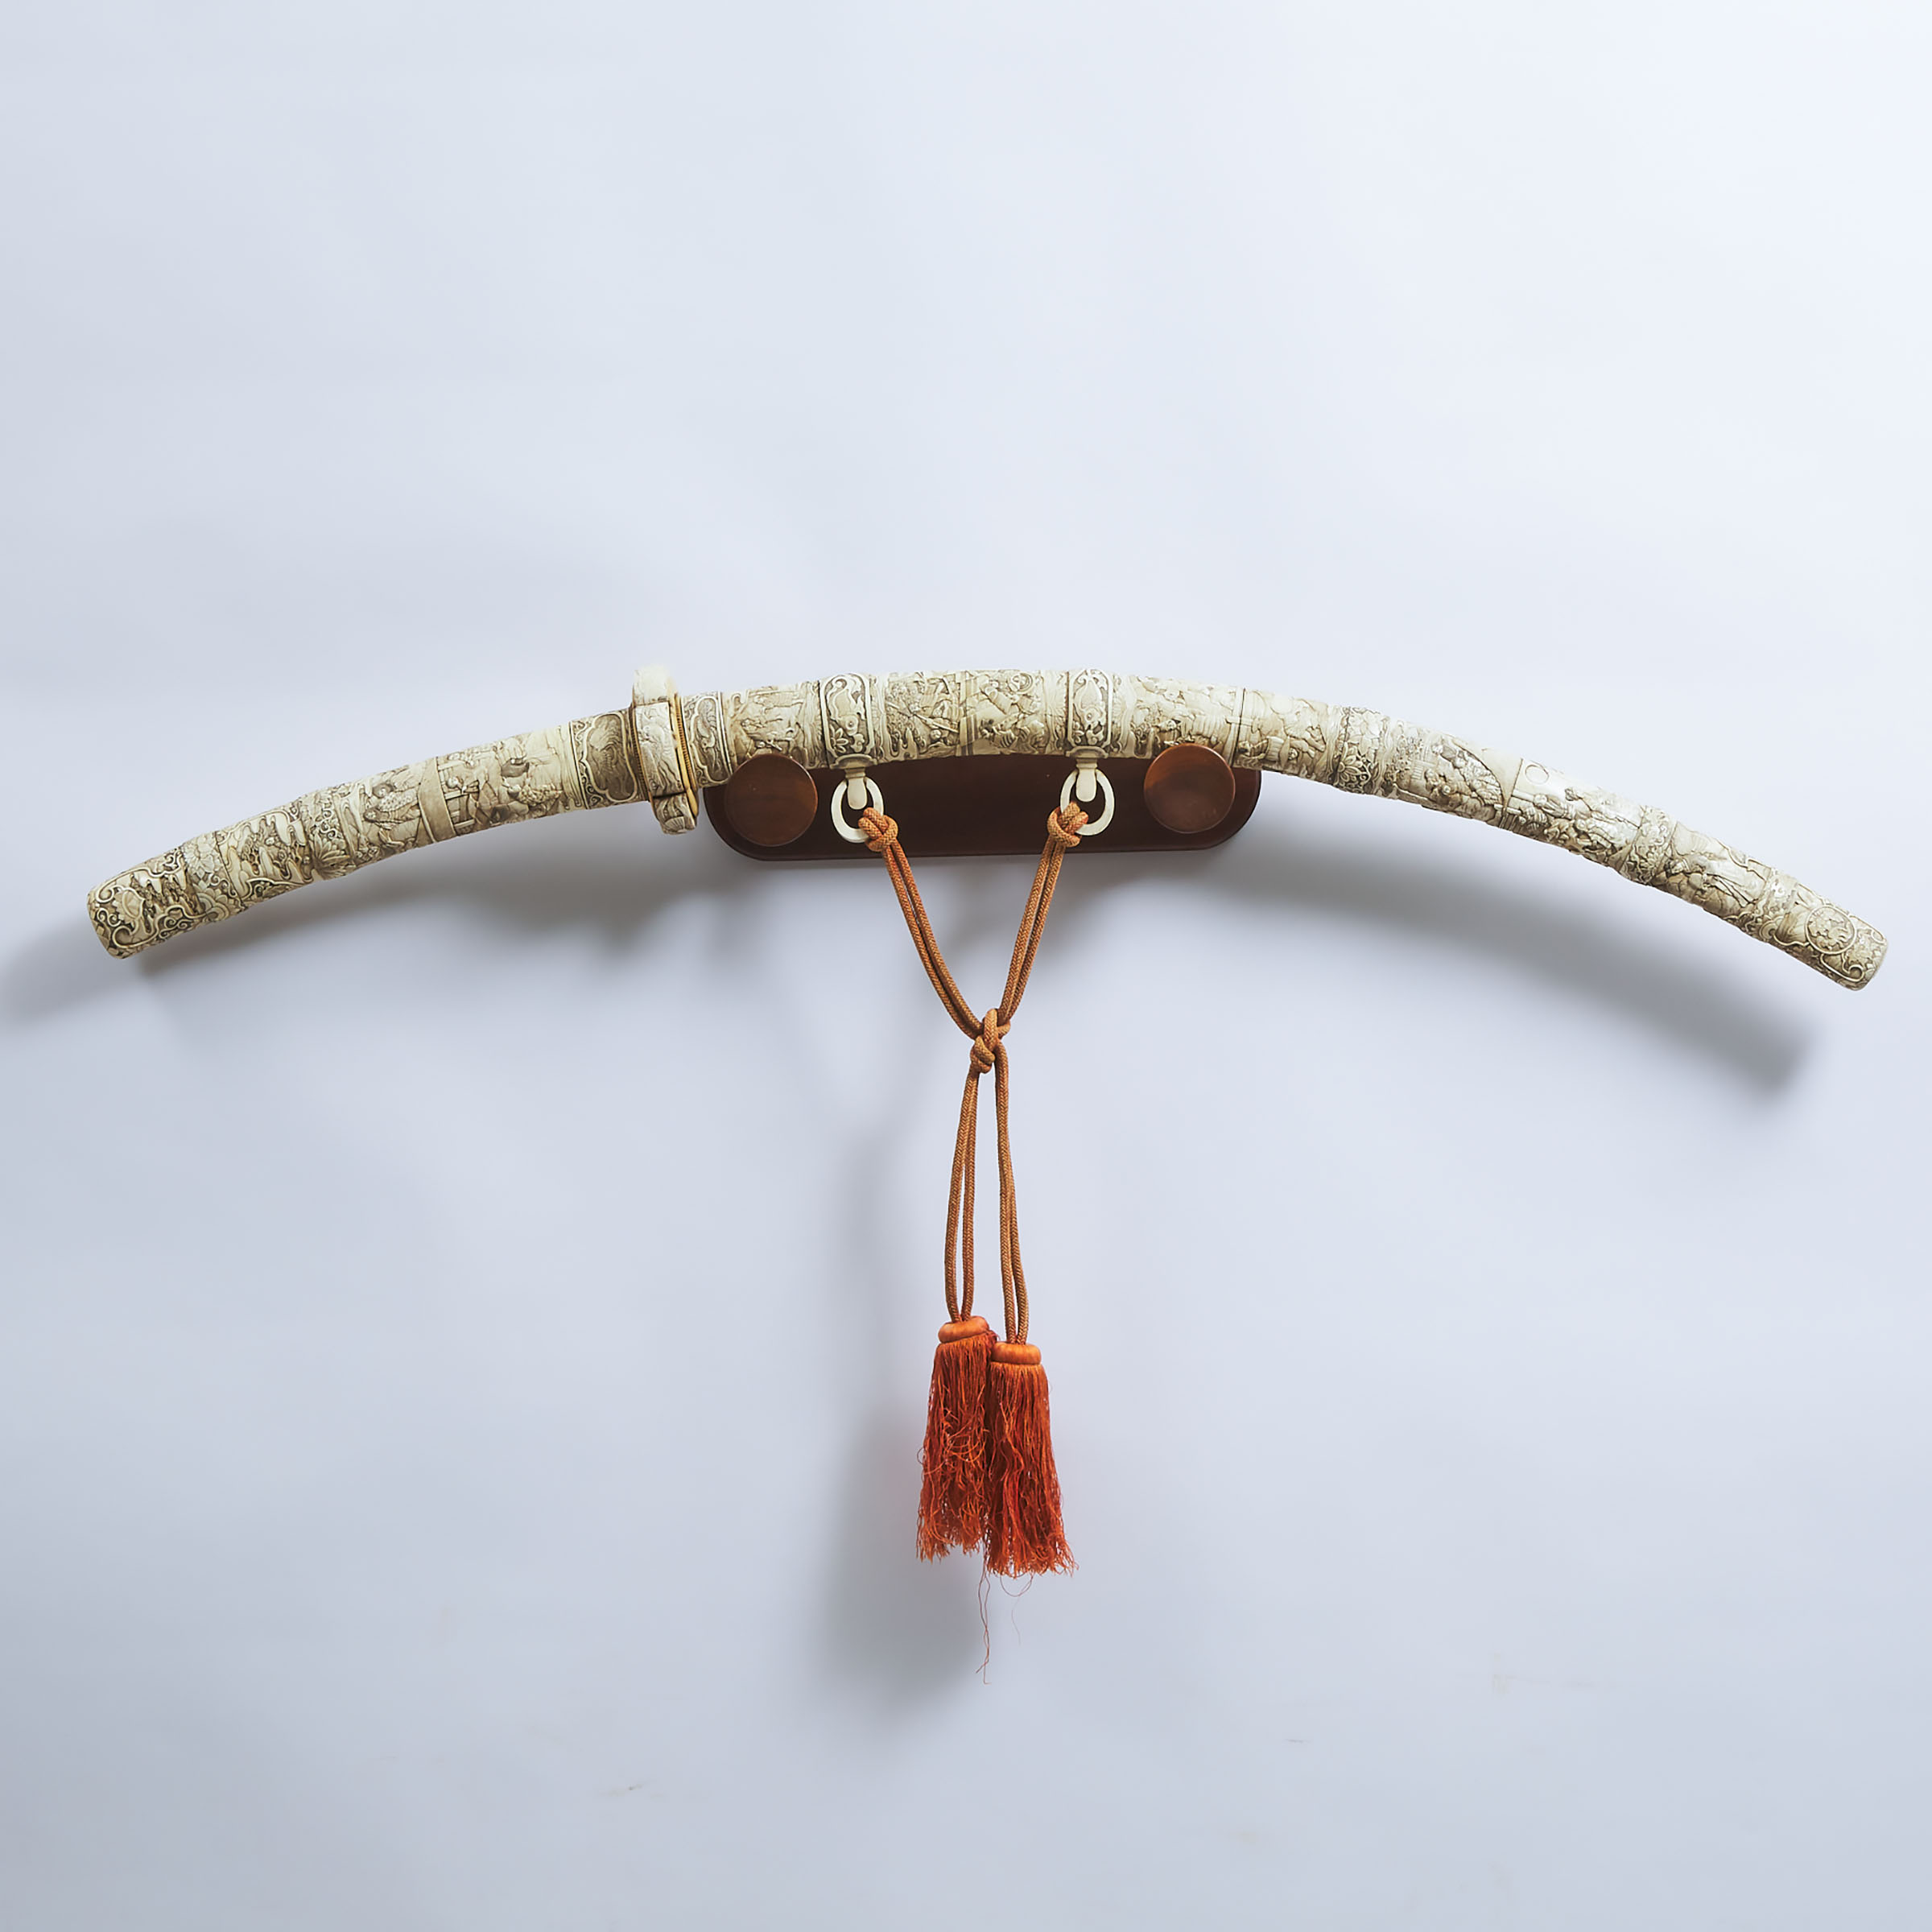 A Large Japanese Carved Ivory Sword (Tachi), Together With a Carved Bone Wakizashi, Meiji Period (1868-1912)